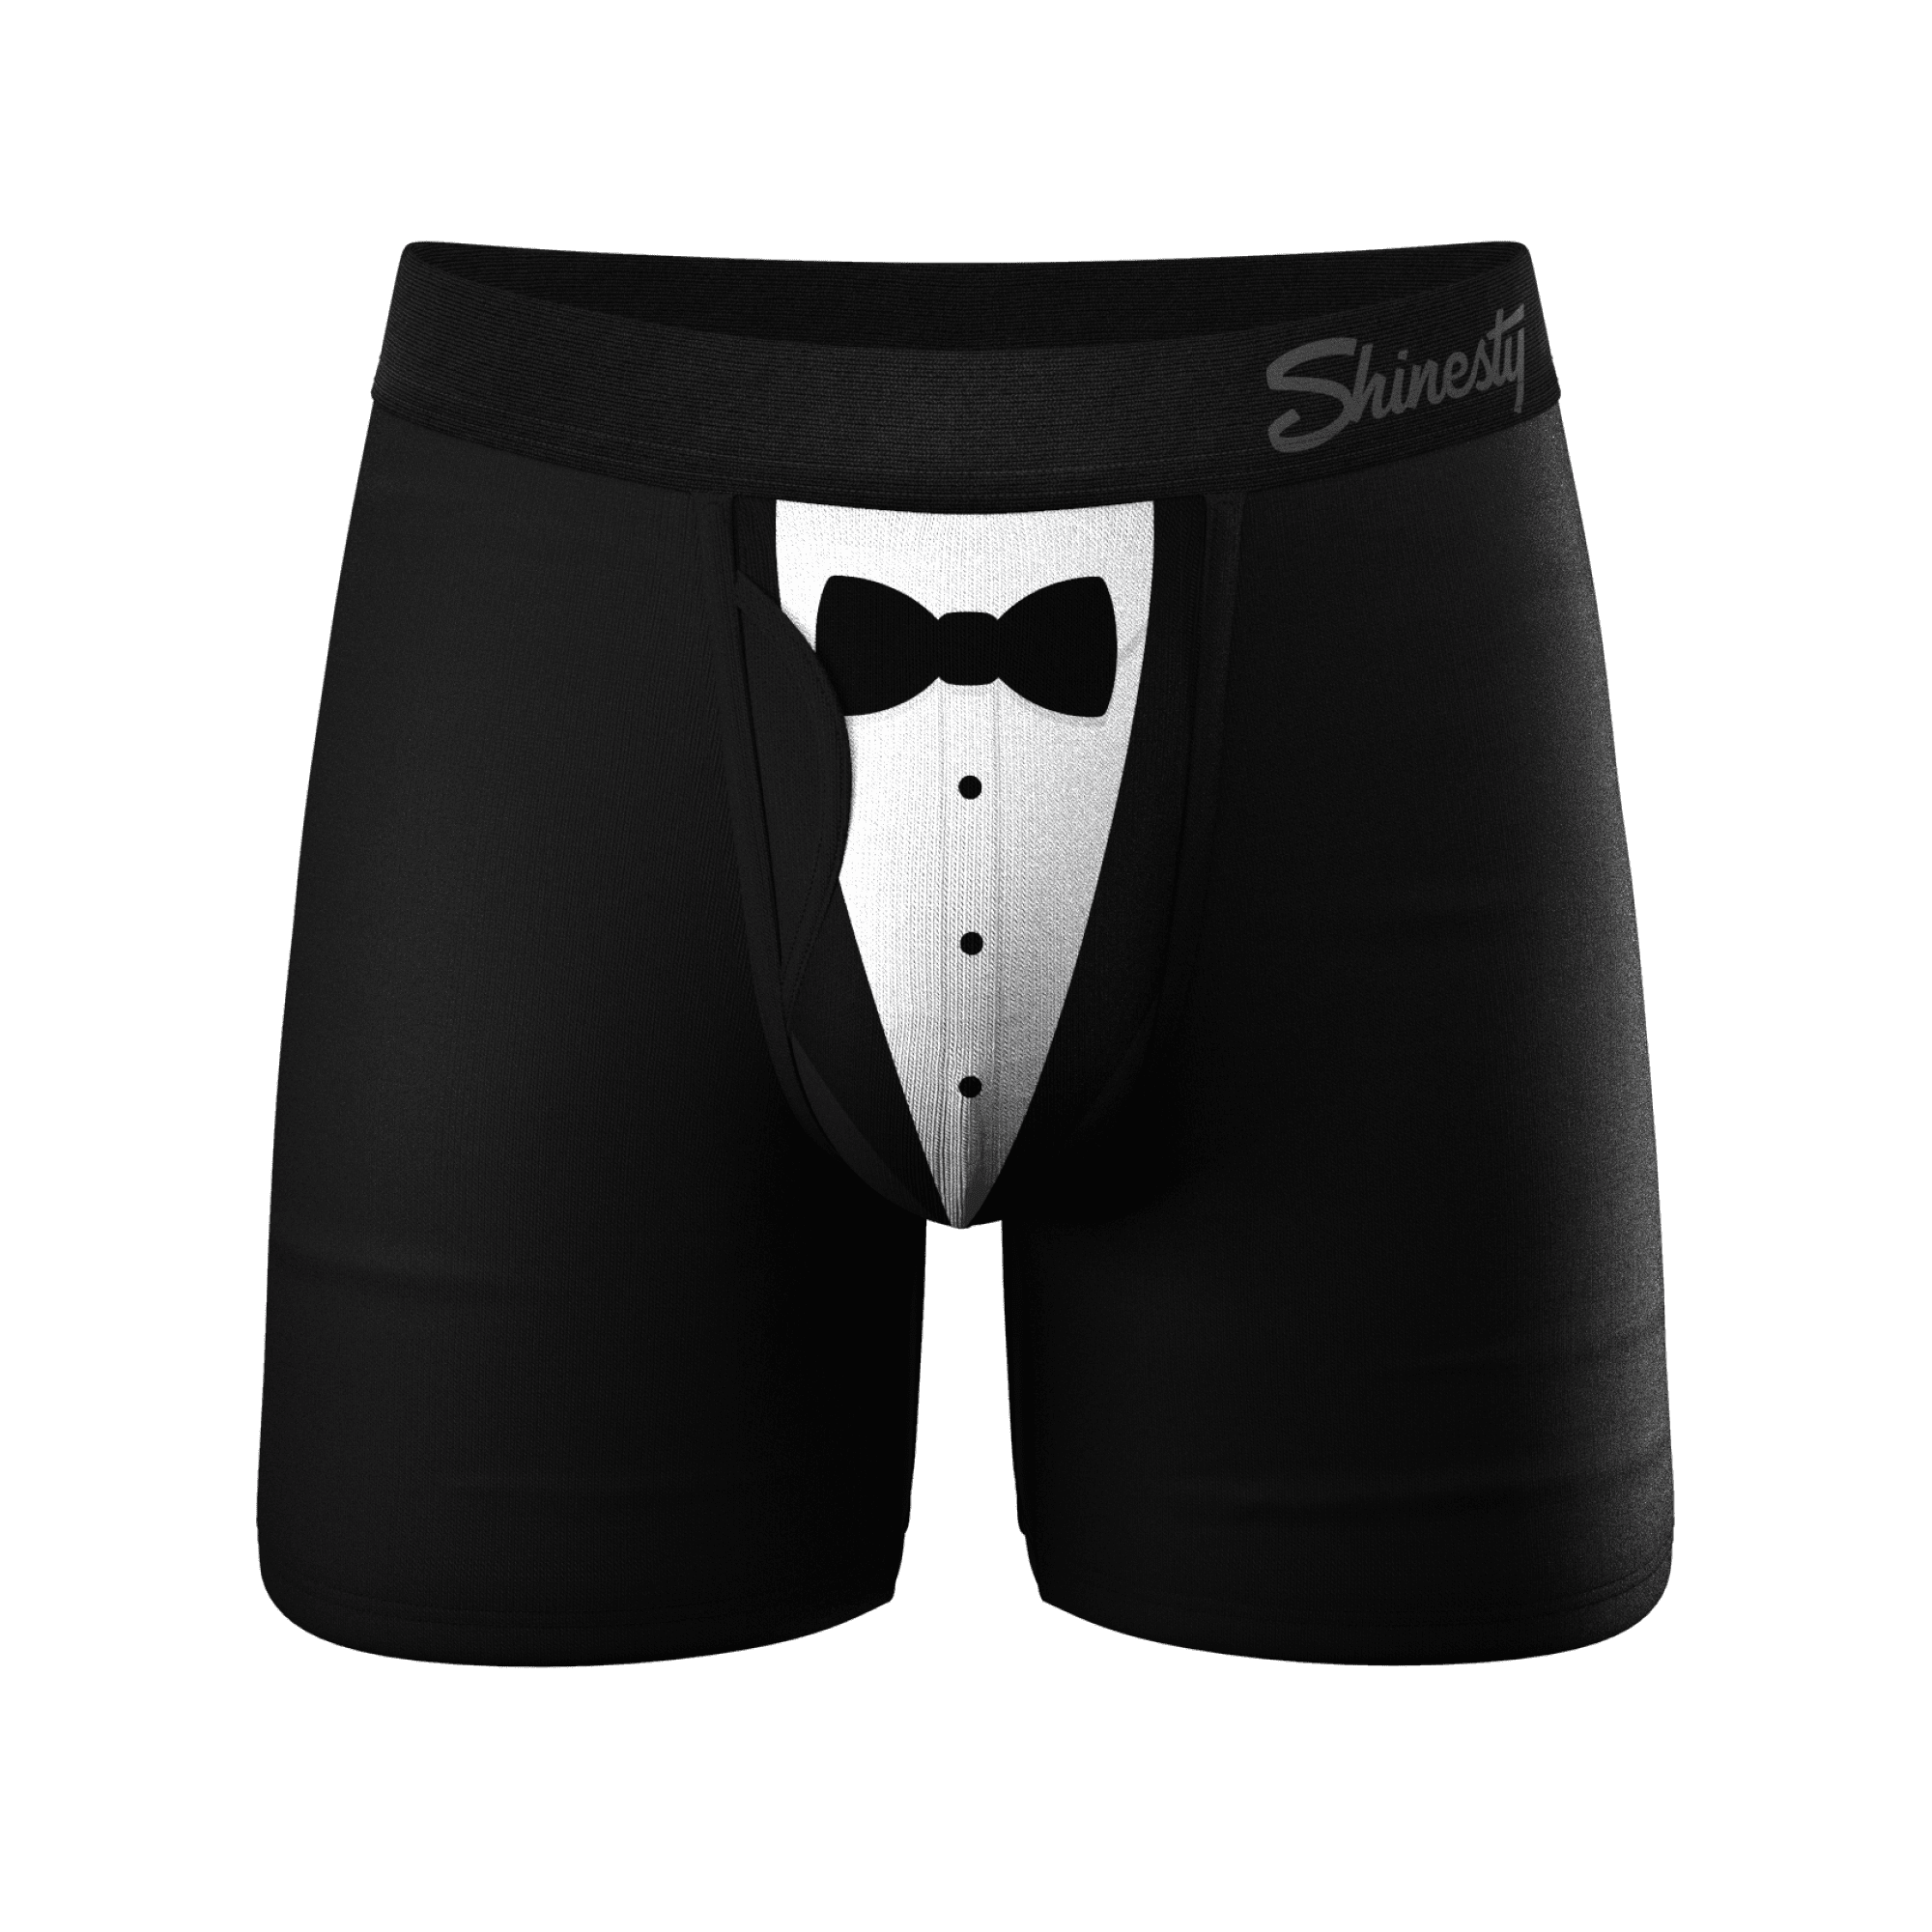 The 009 - Shinesty Black Tuxedo Ball Hammock Pouch Underwear With Fly 5X